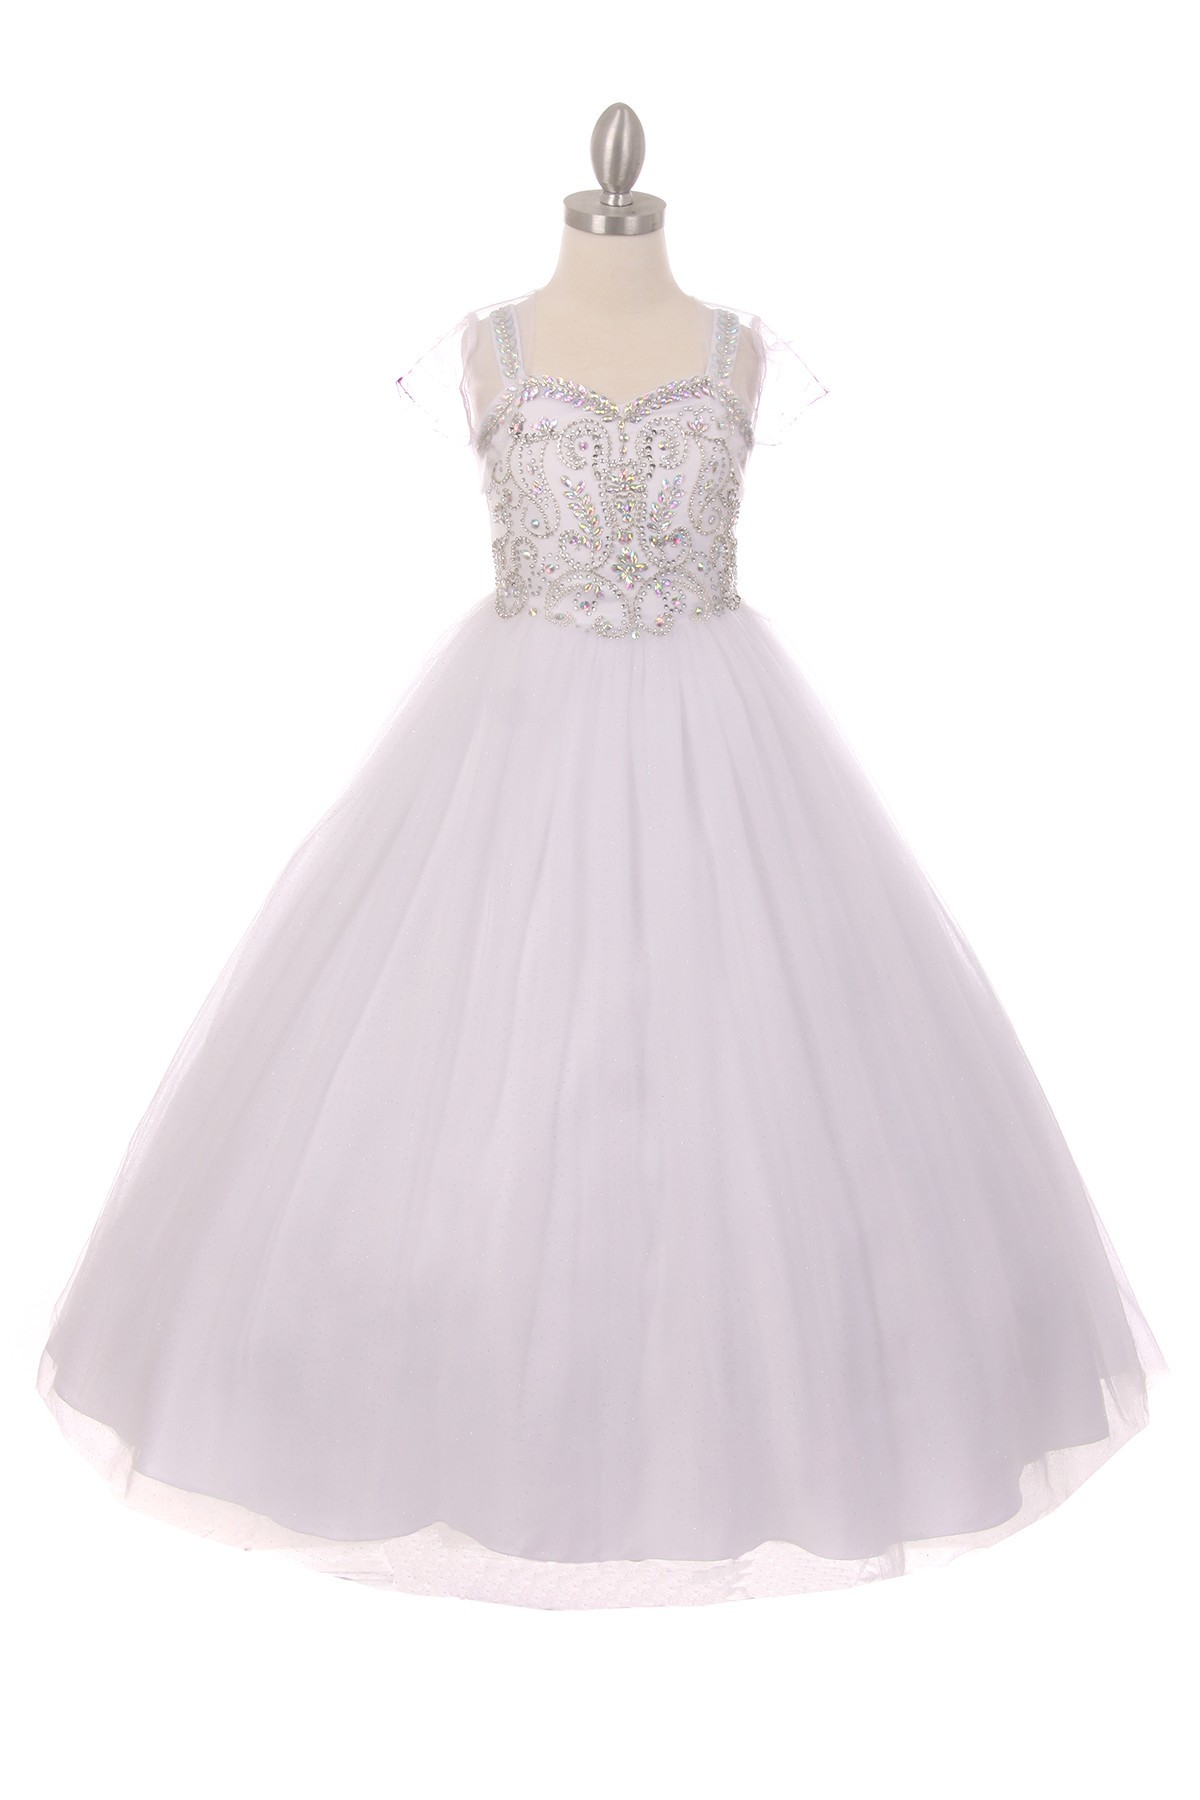 white rhinestone pageant dresses